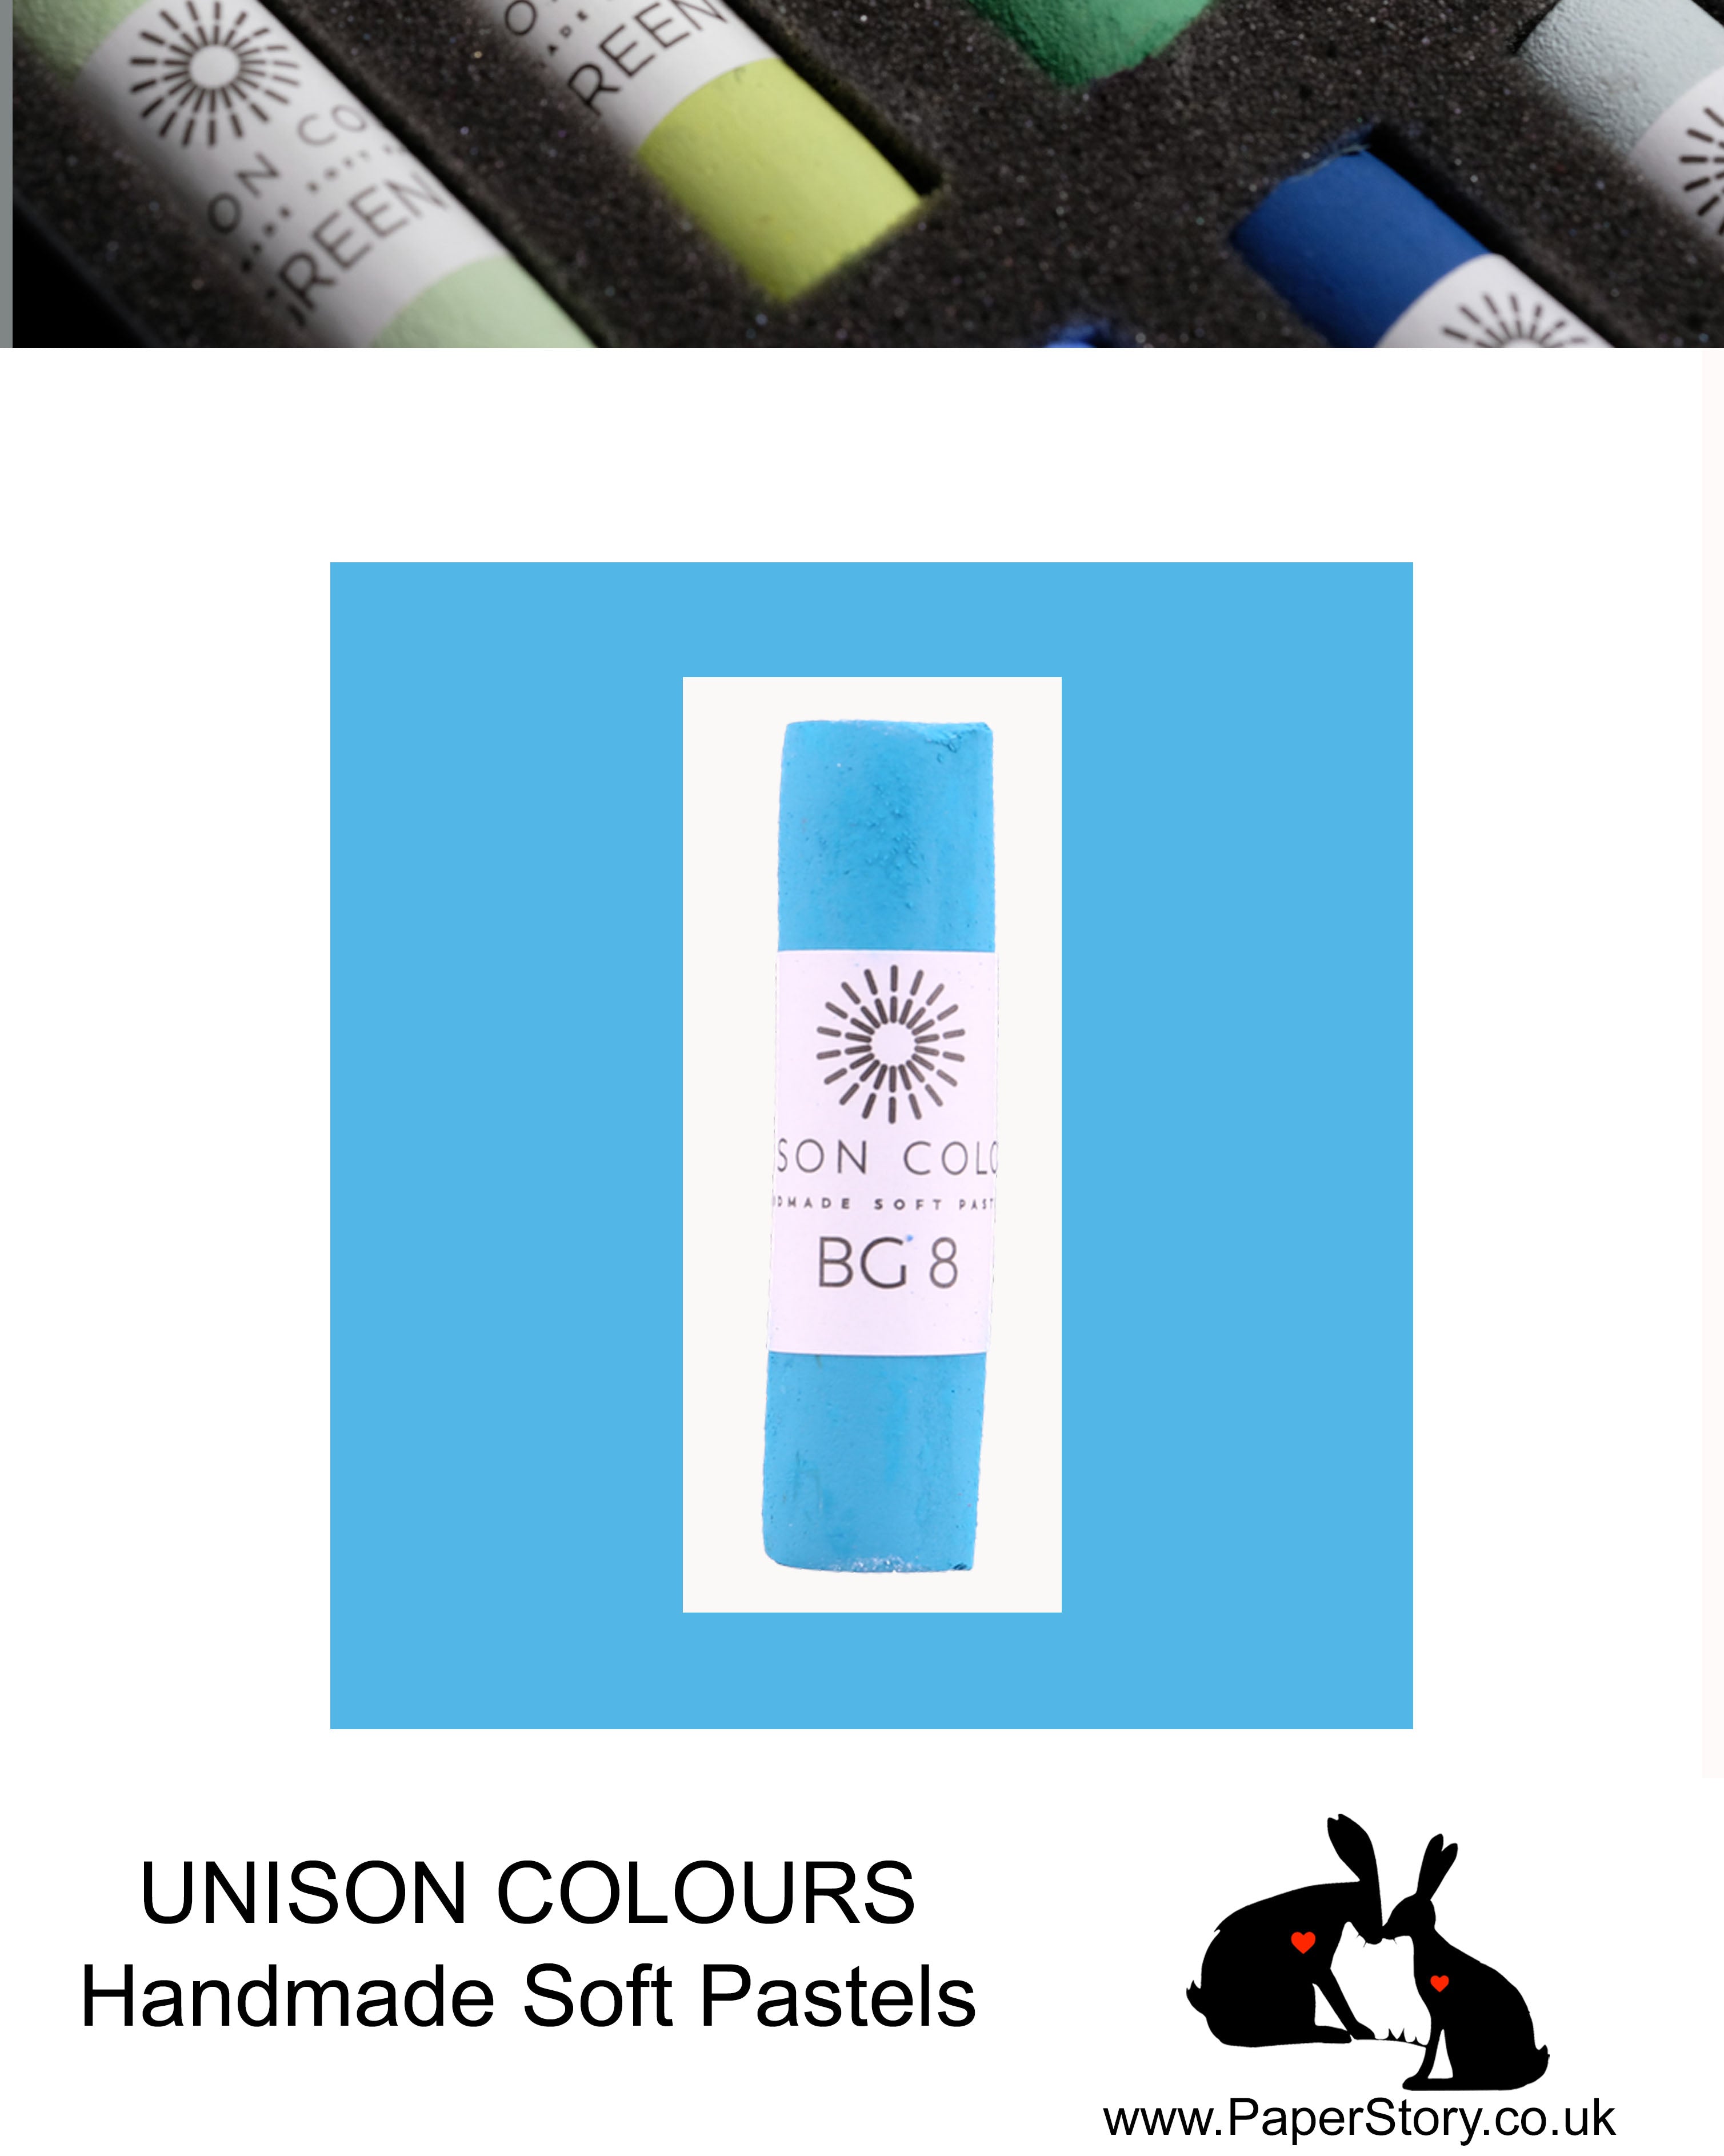 Unison Colour Handmade Soft Pastels Blue Green 08 - Size Regular